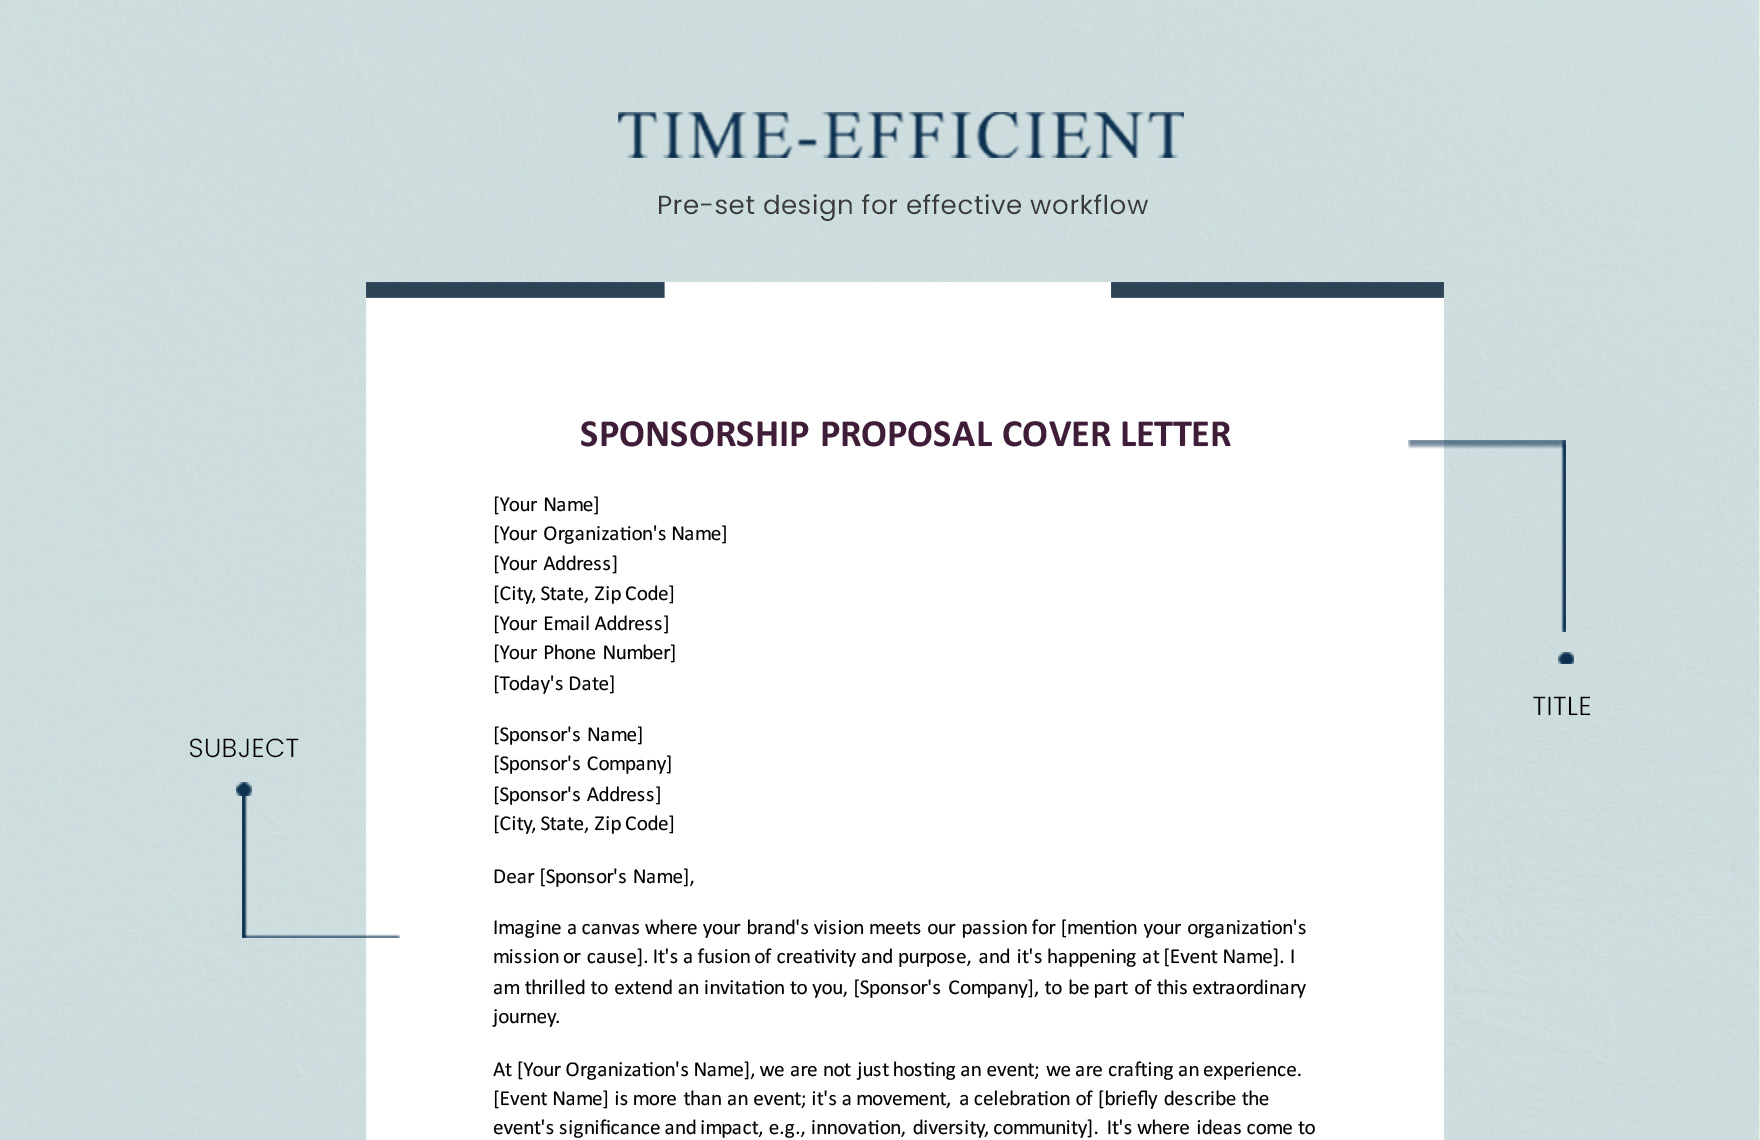 Sponsorship Proposal Cover Letter